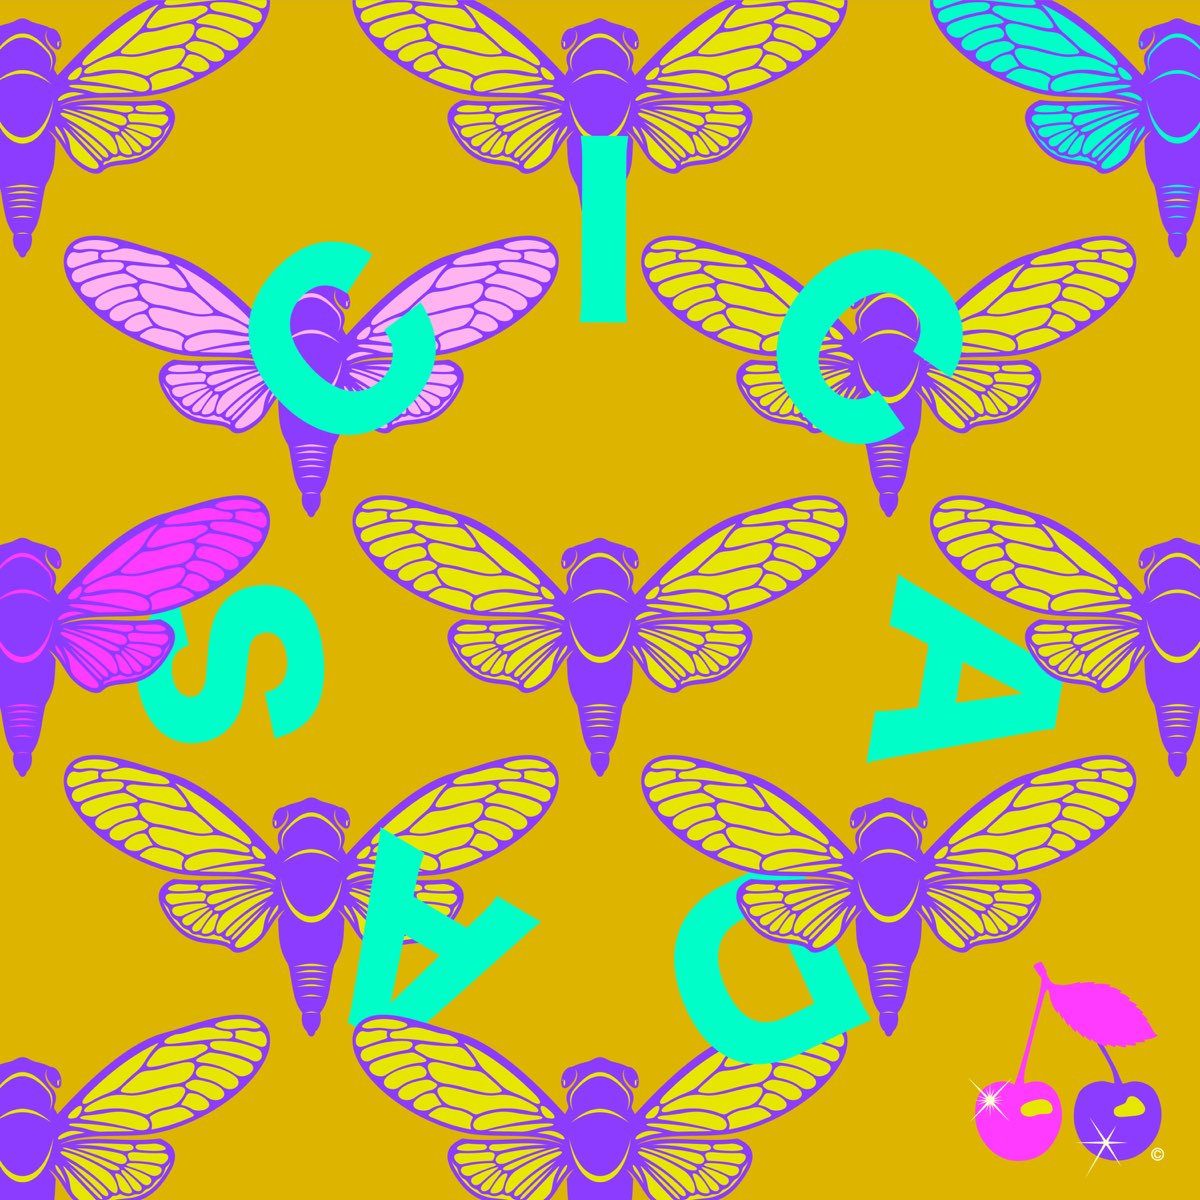 Butterfly louis vuitton HD wallpapers